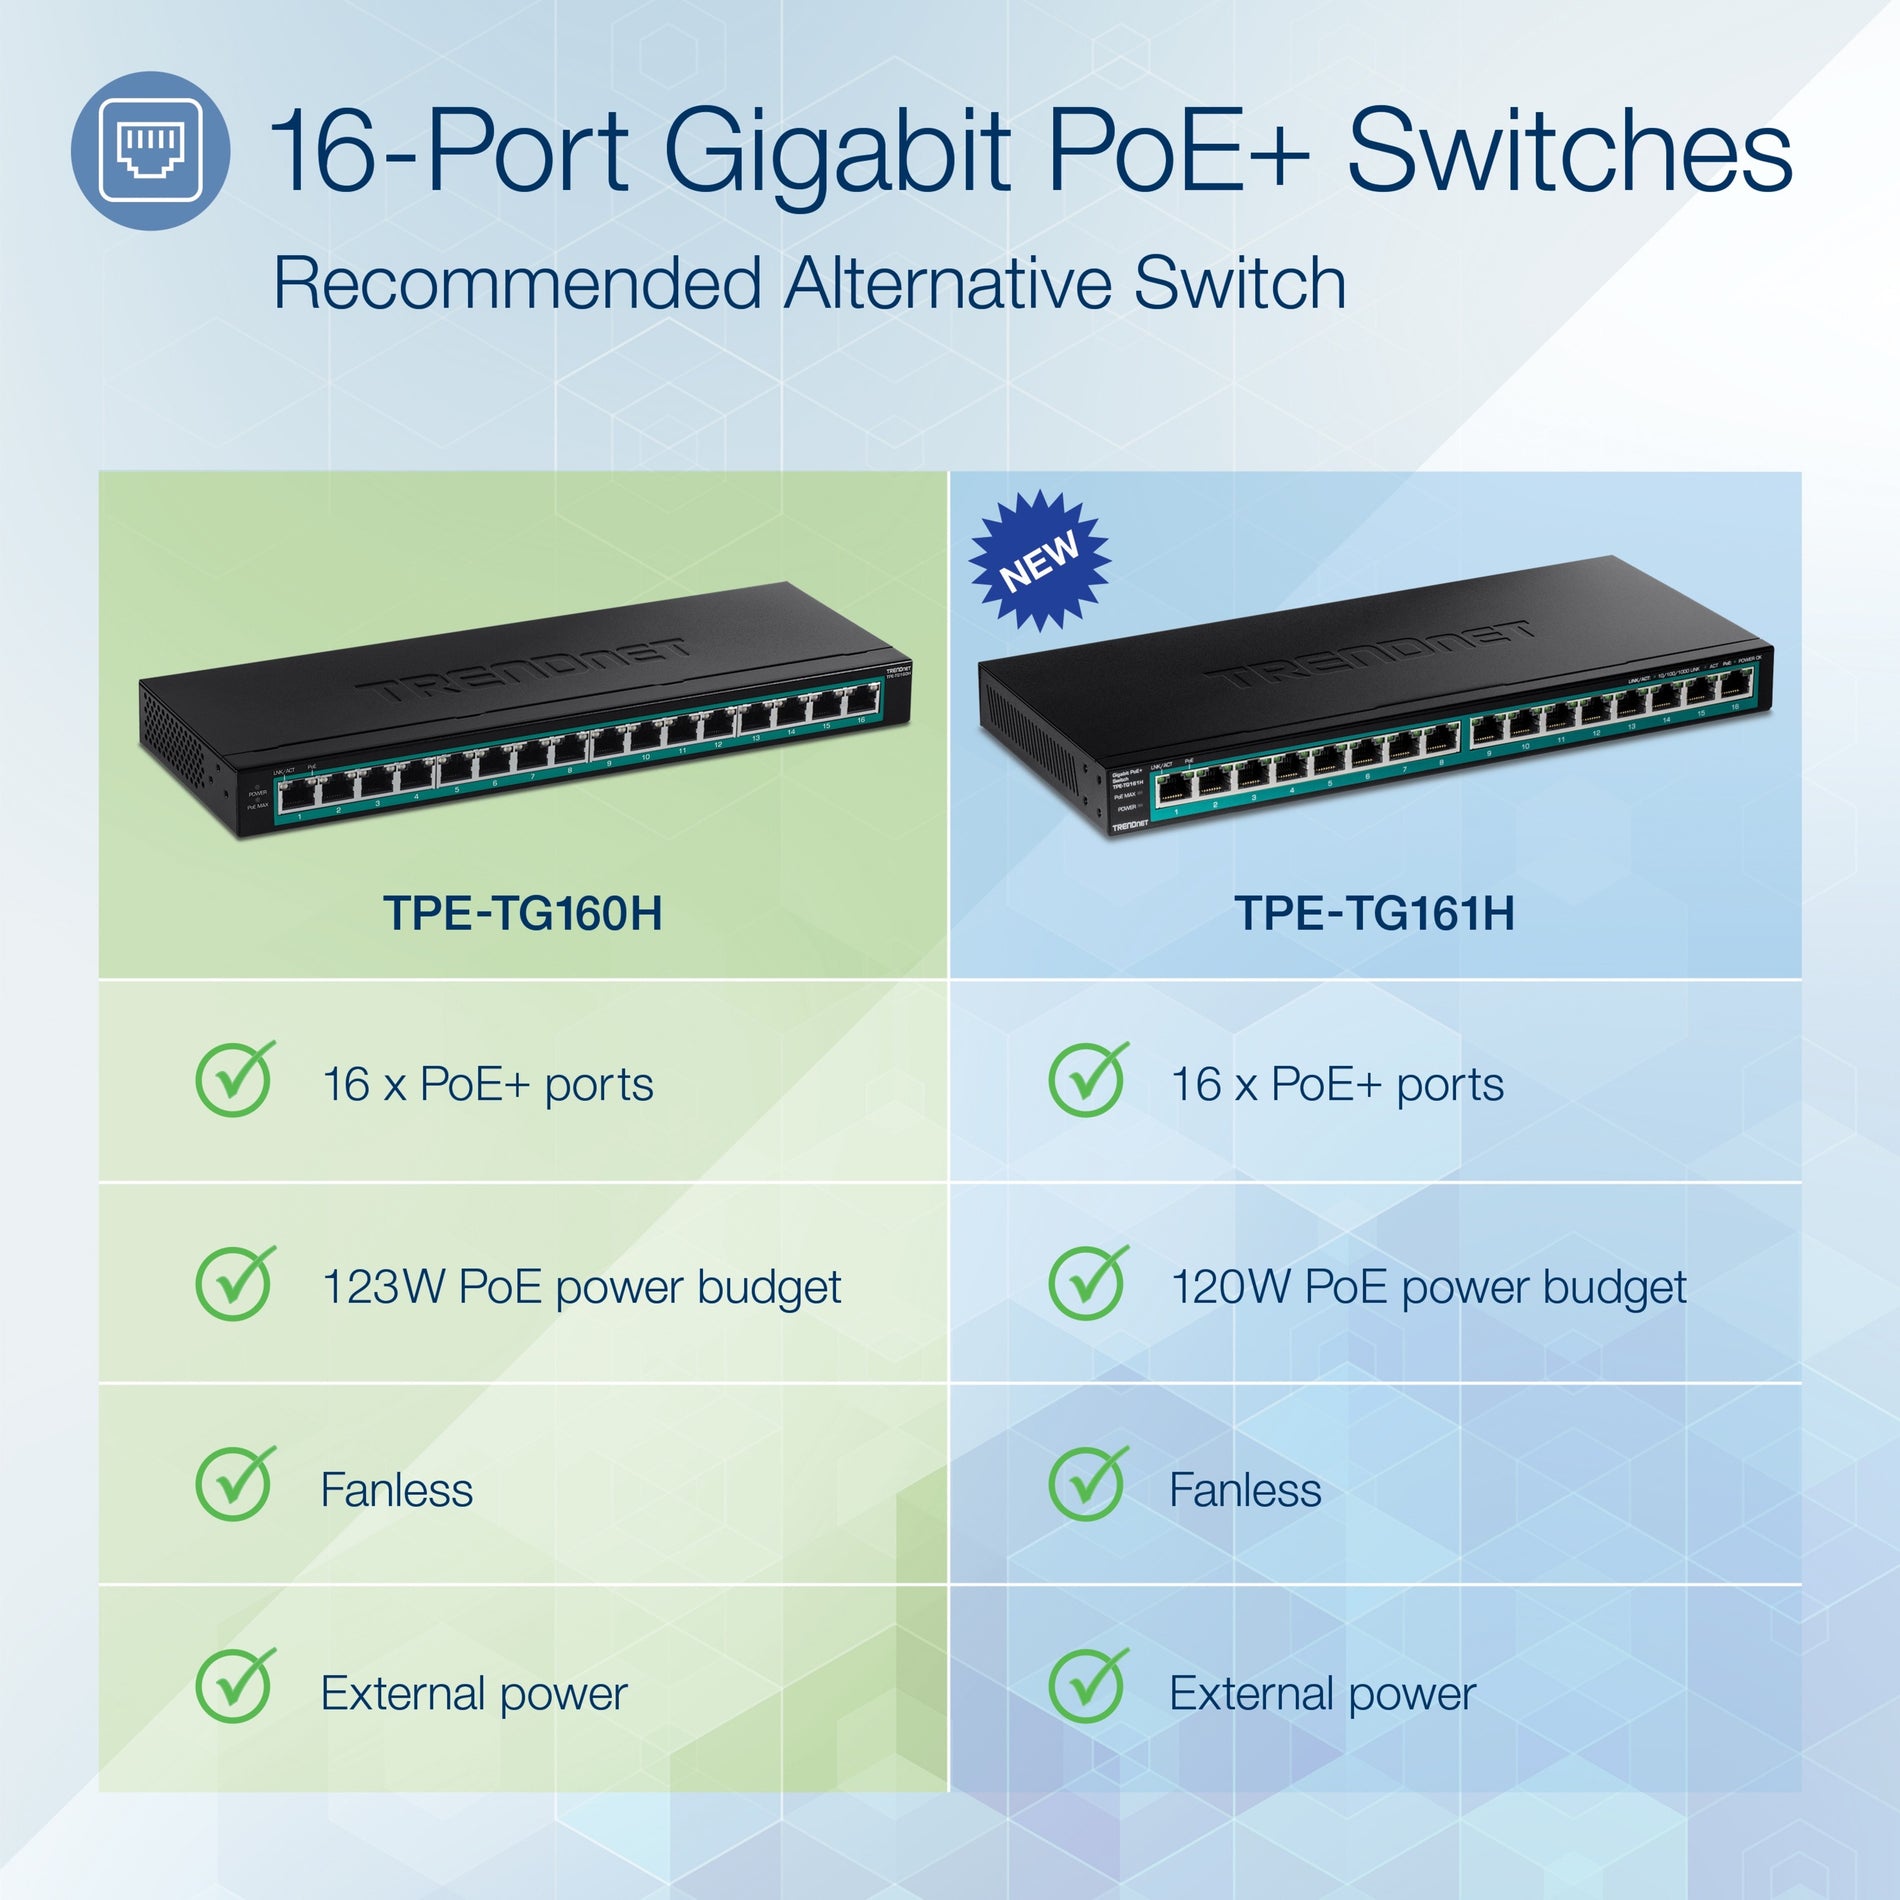 TRENDnet TPE-TG160H Ethernet Switch, 16-Port Gigabit PoE+, 123W PoE Power Budget